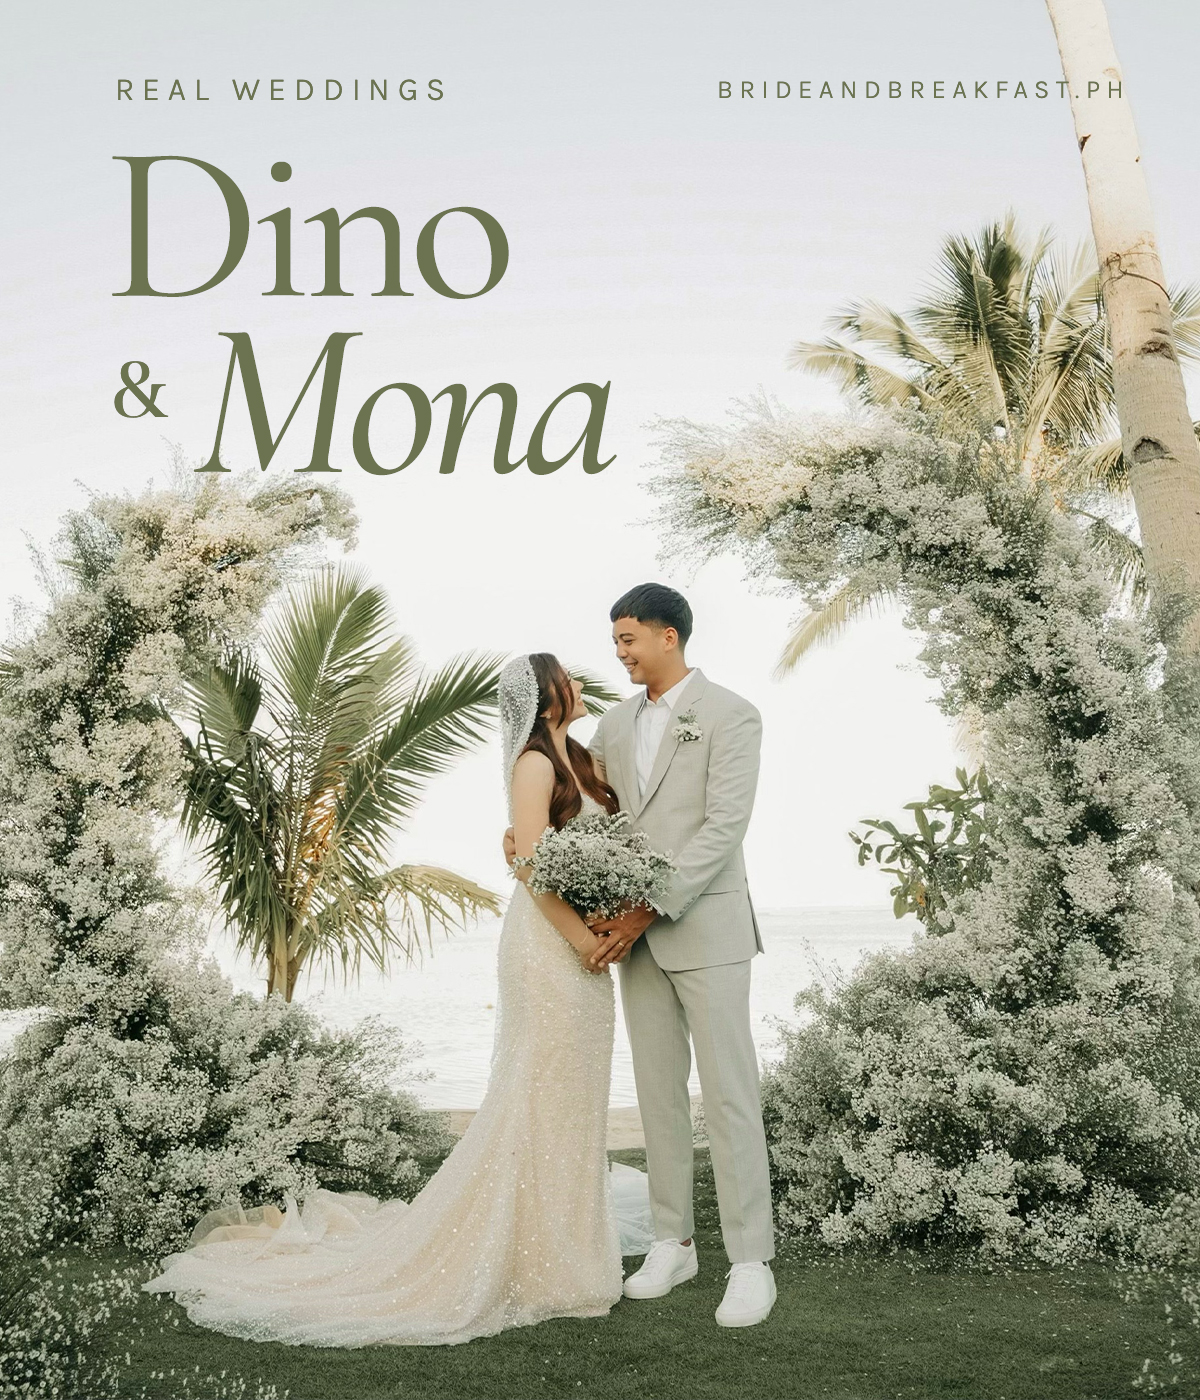 Dino and Mona